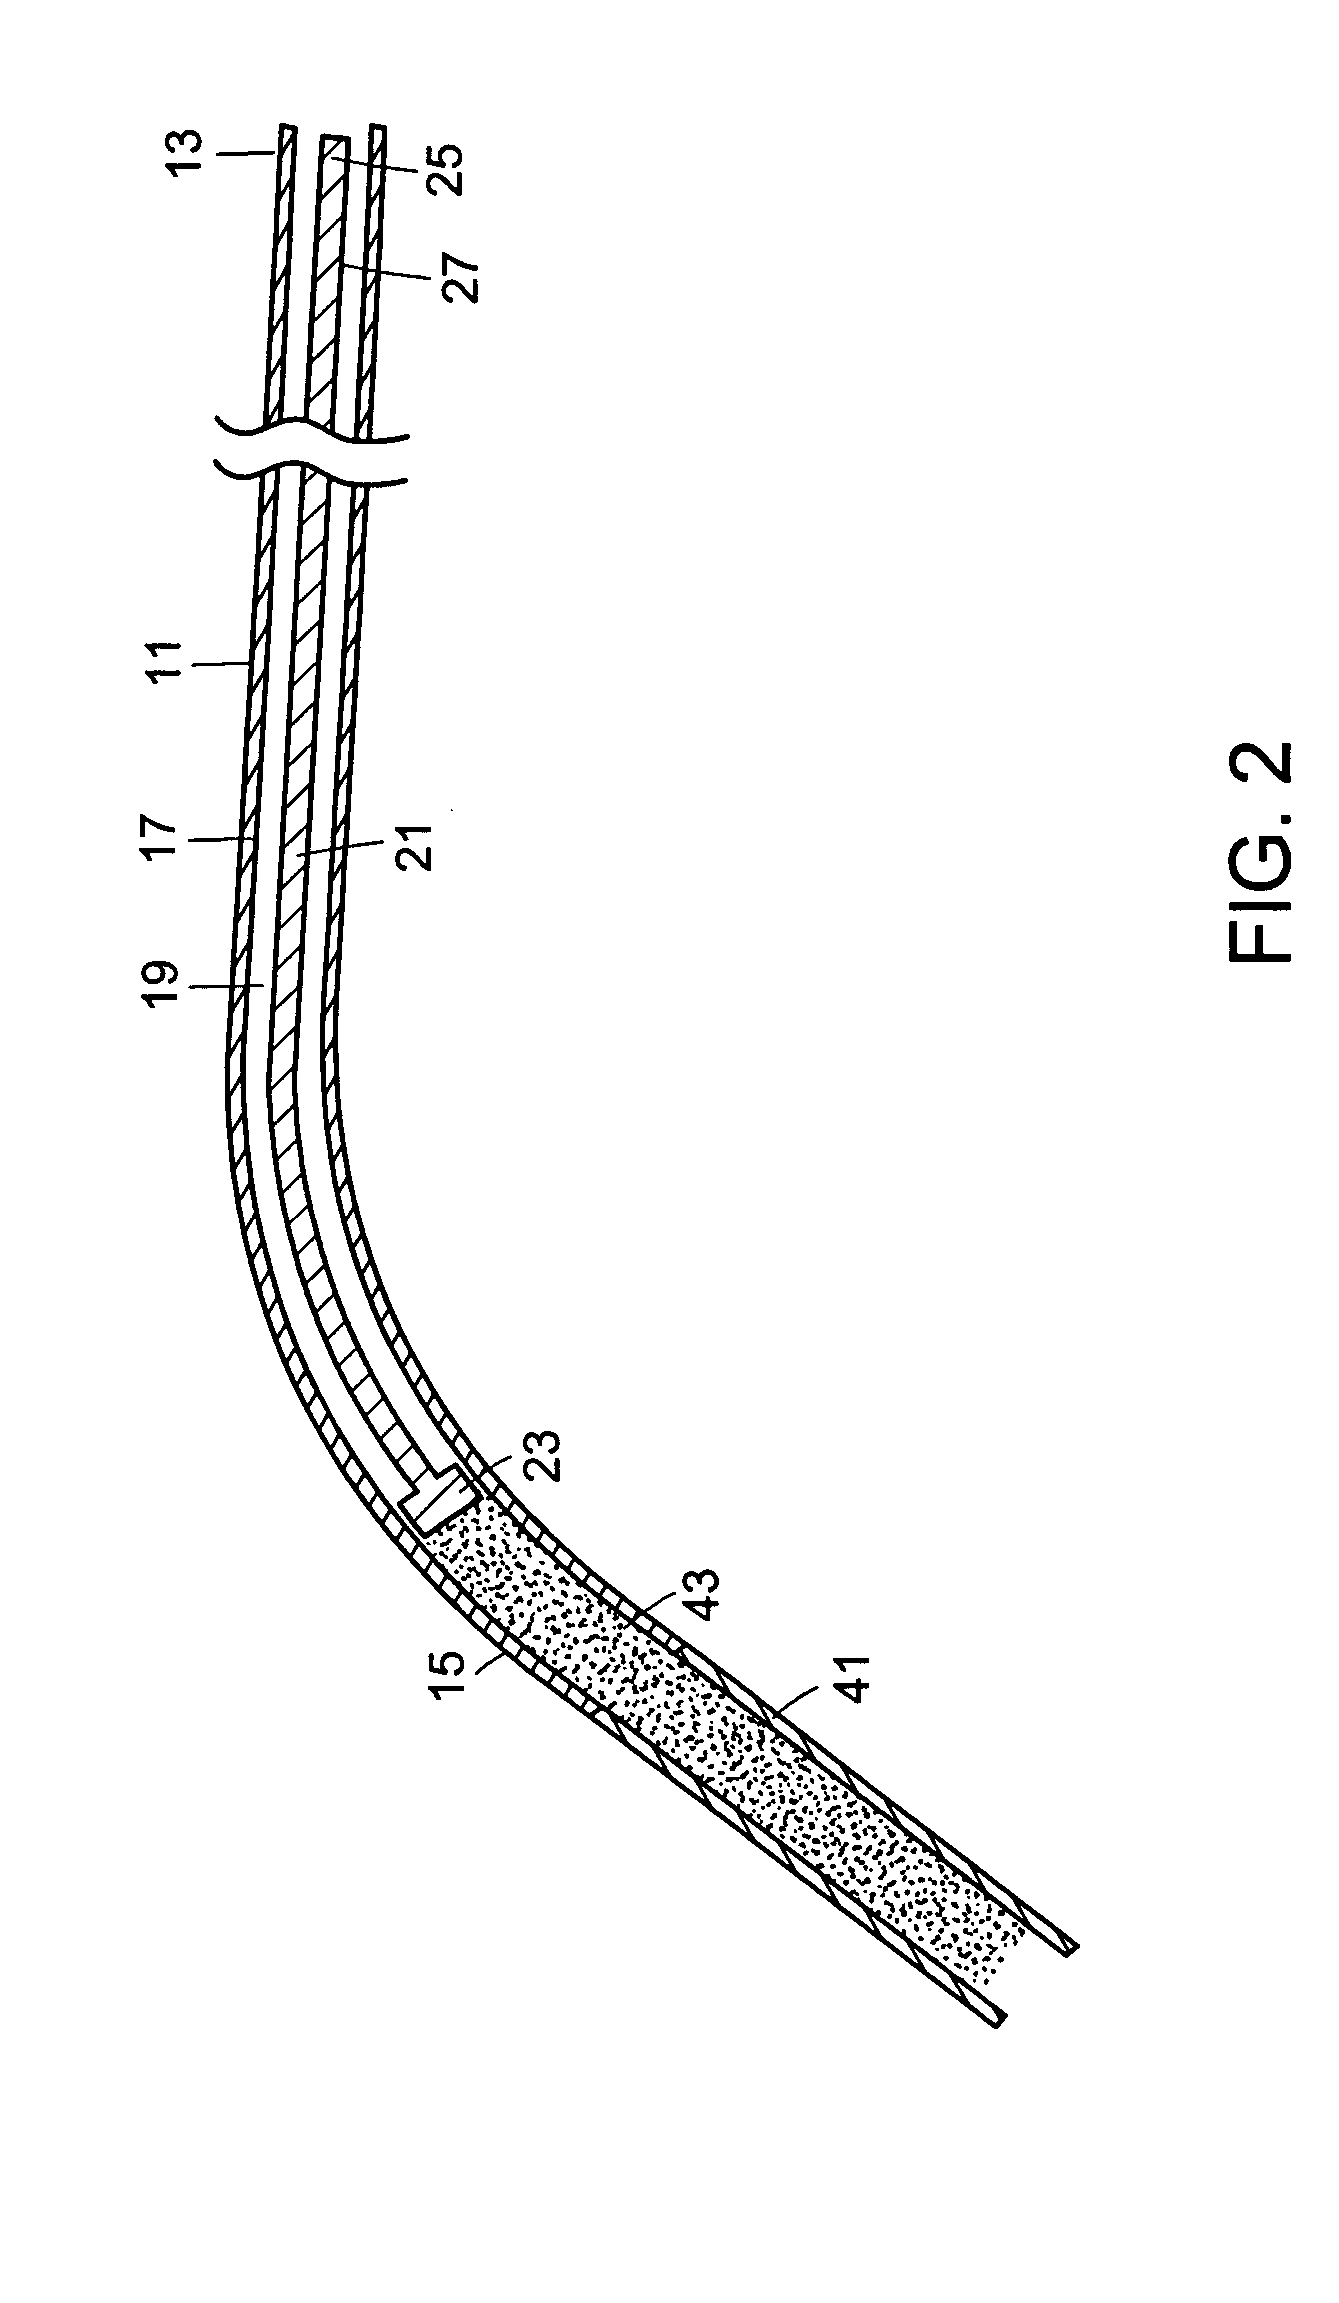 Vertebroplasty device having a flexible plunger